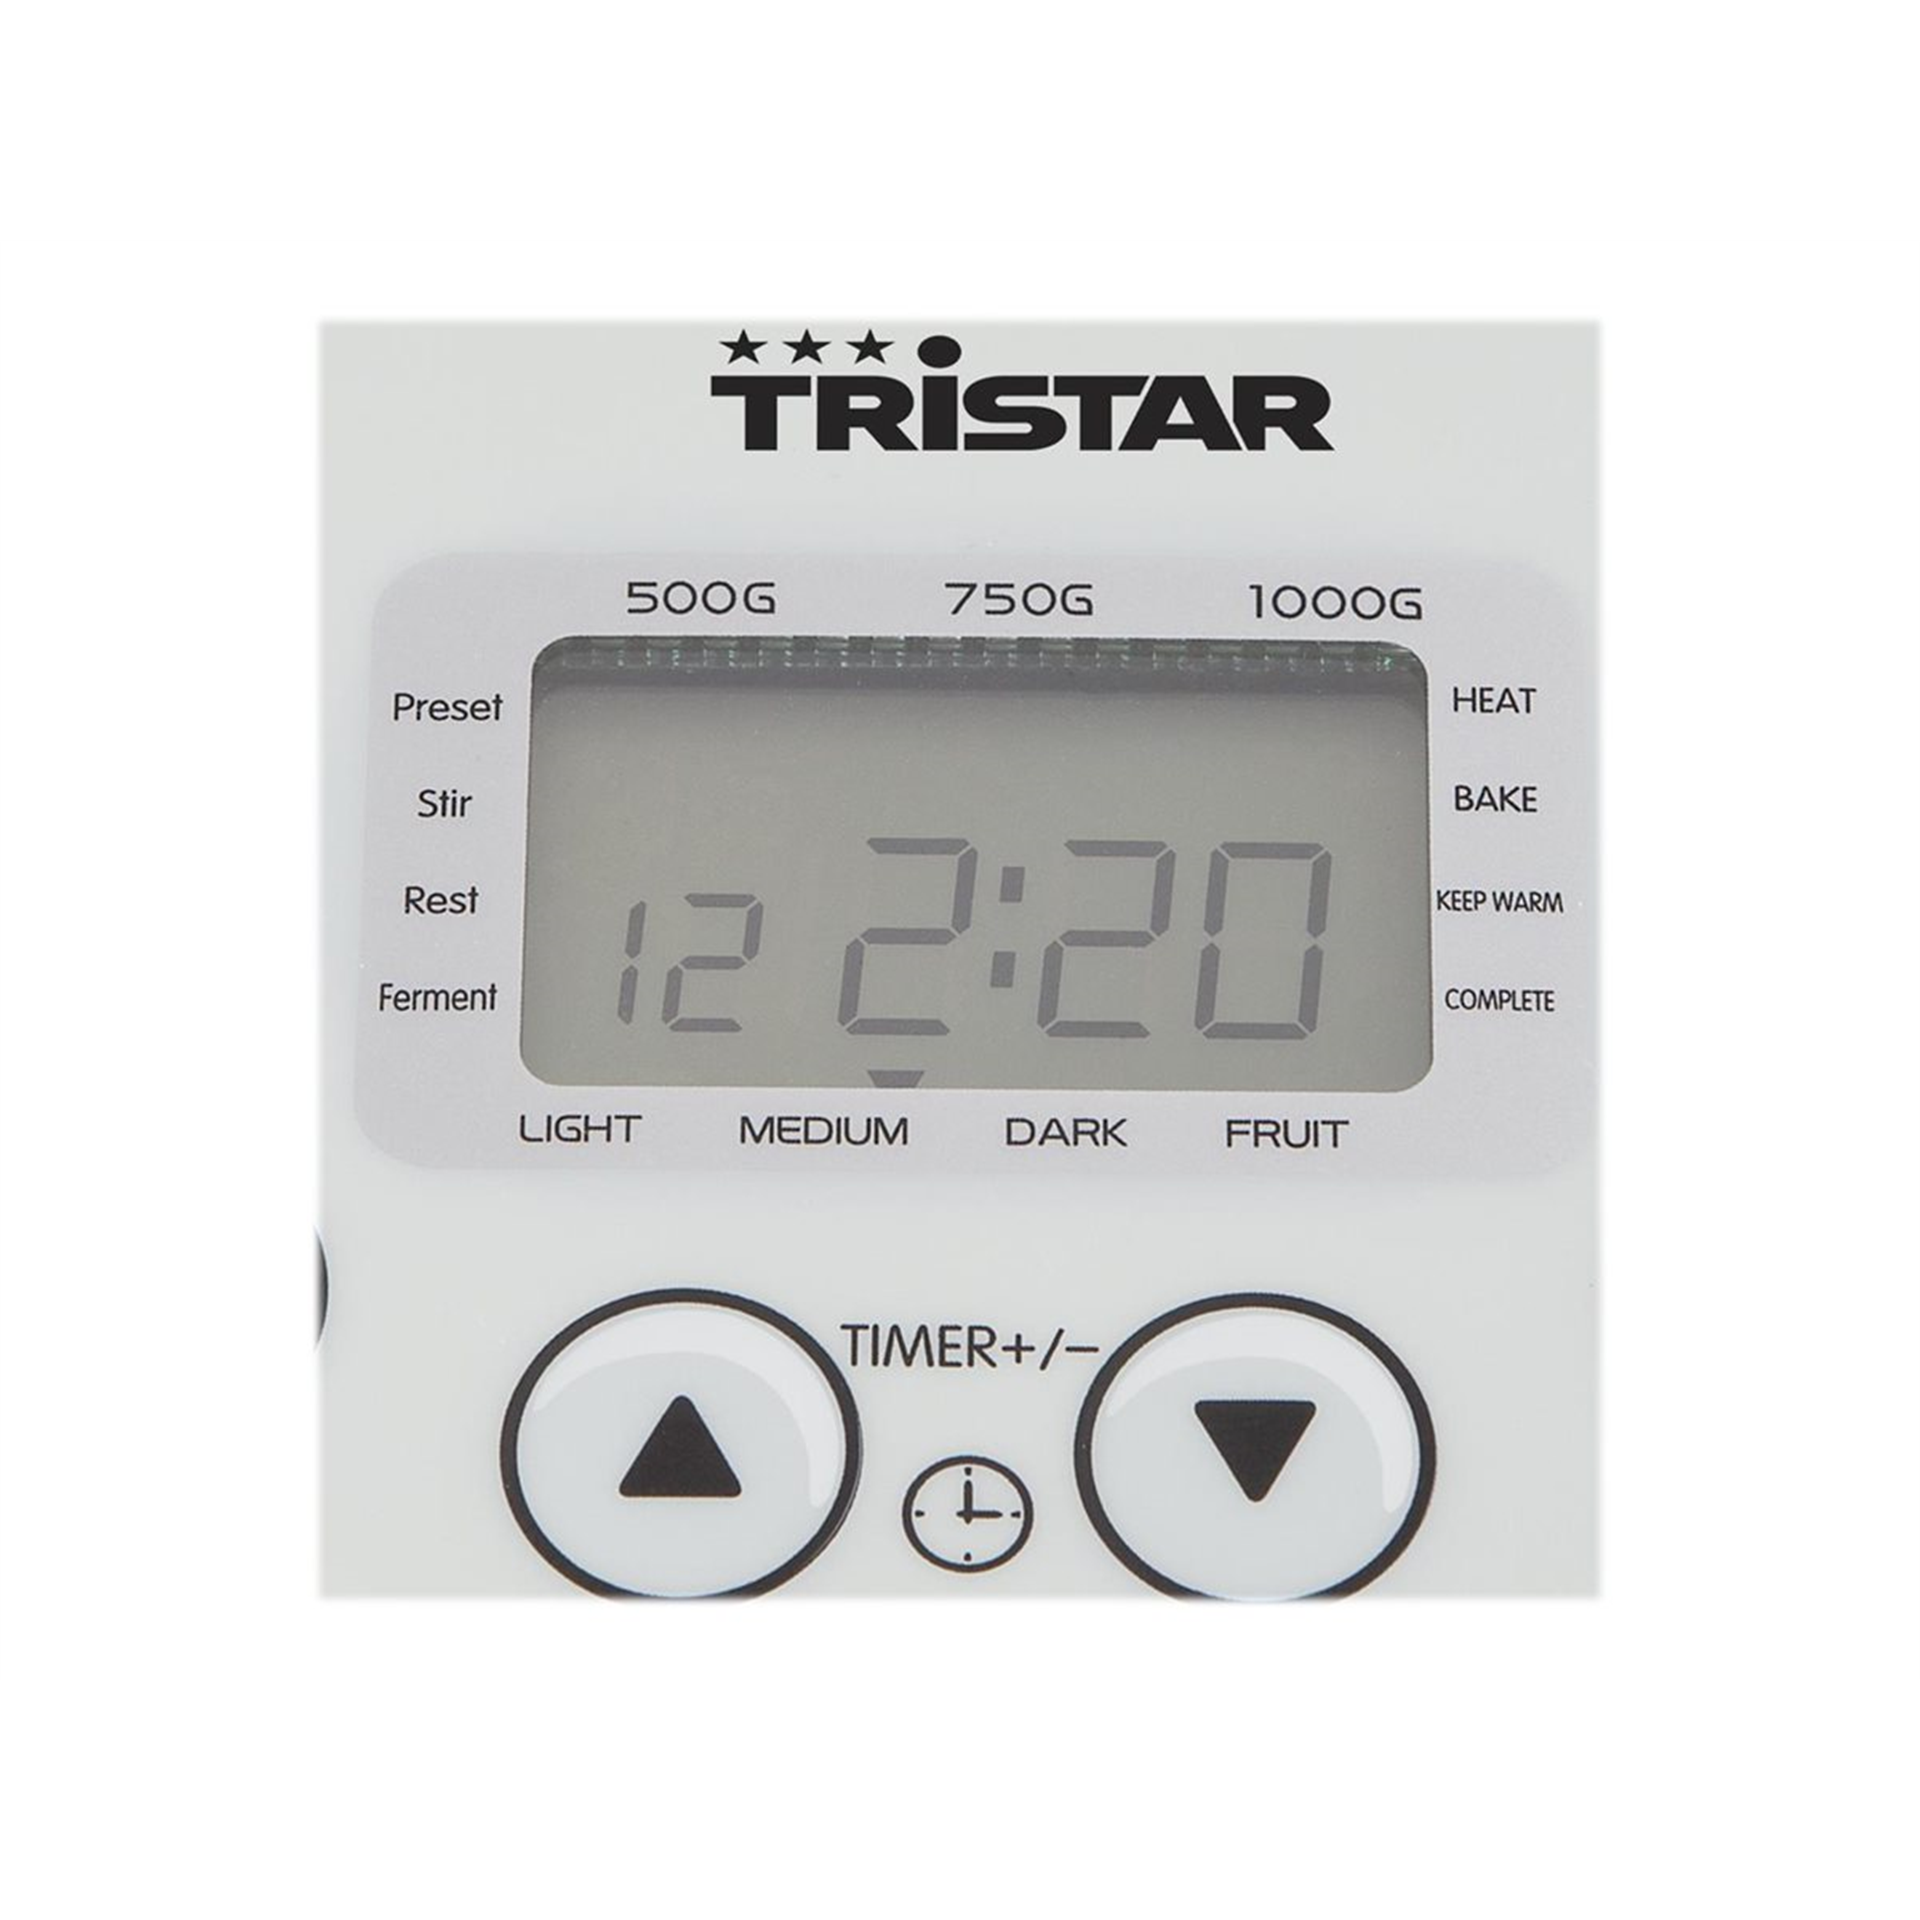 Tristar Bread Maker BM-4586 Power 550 W Number of programs 19 Display LCD White